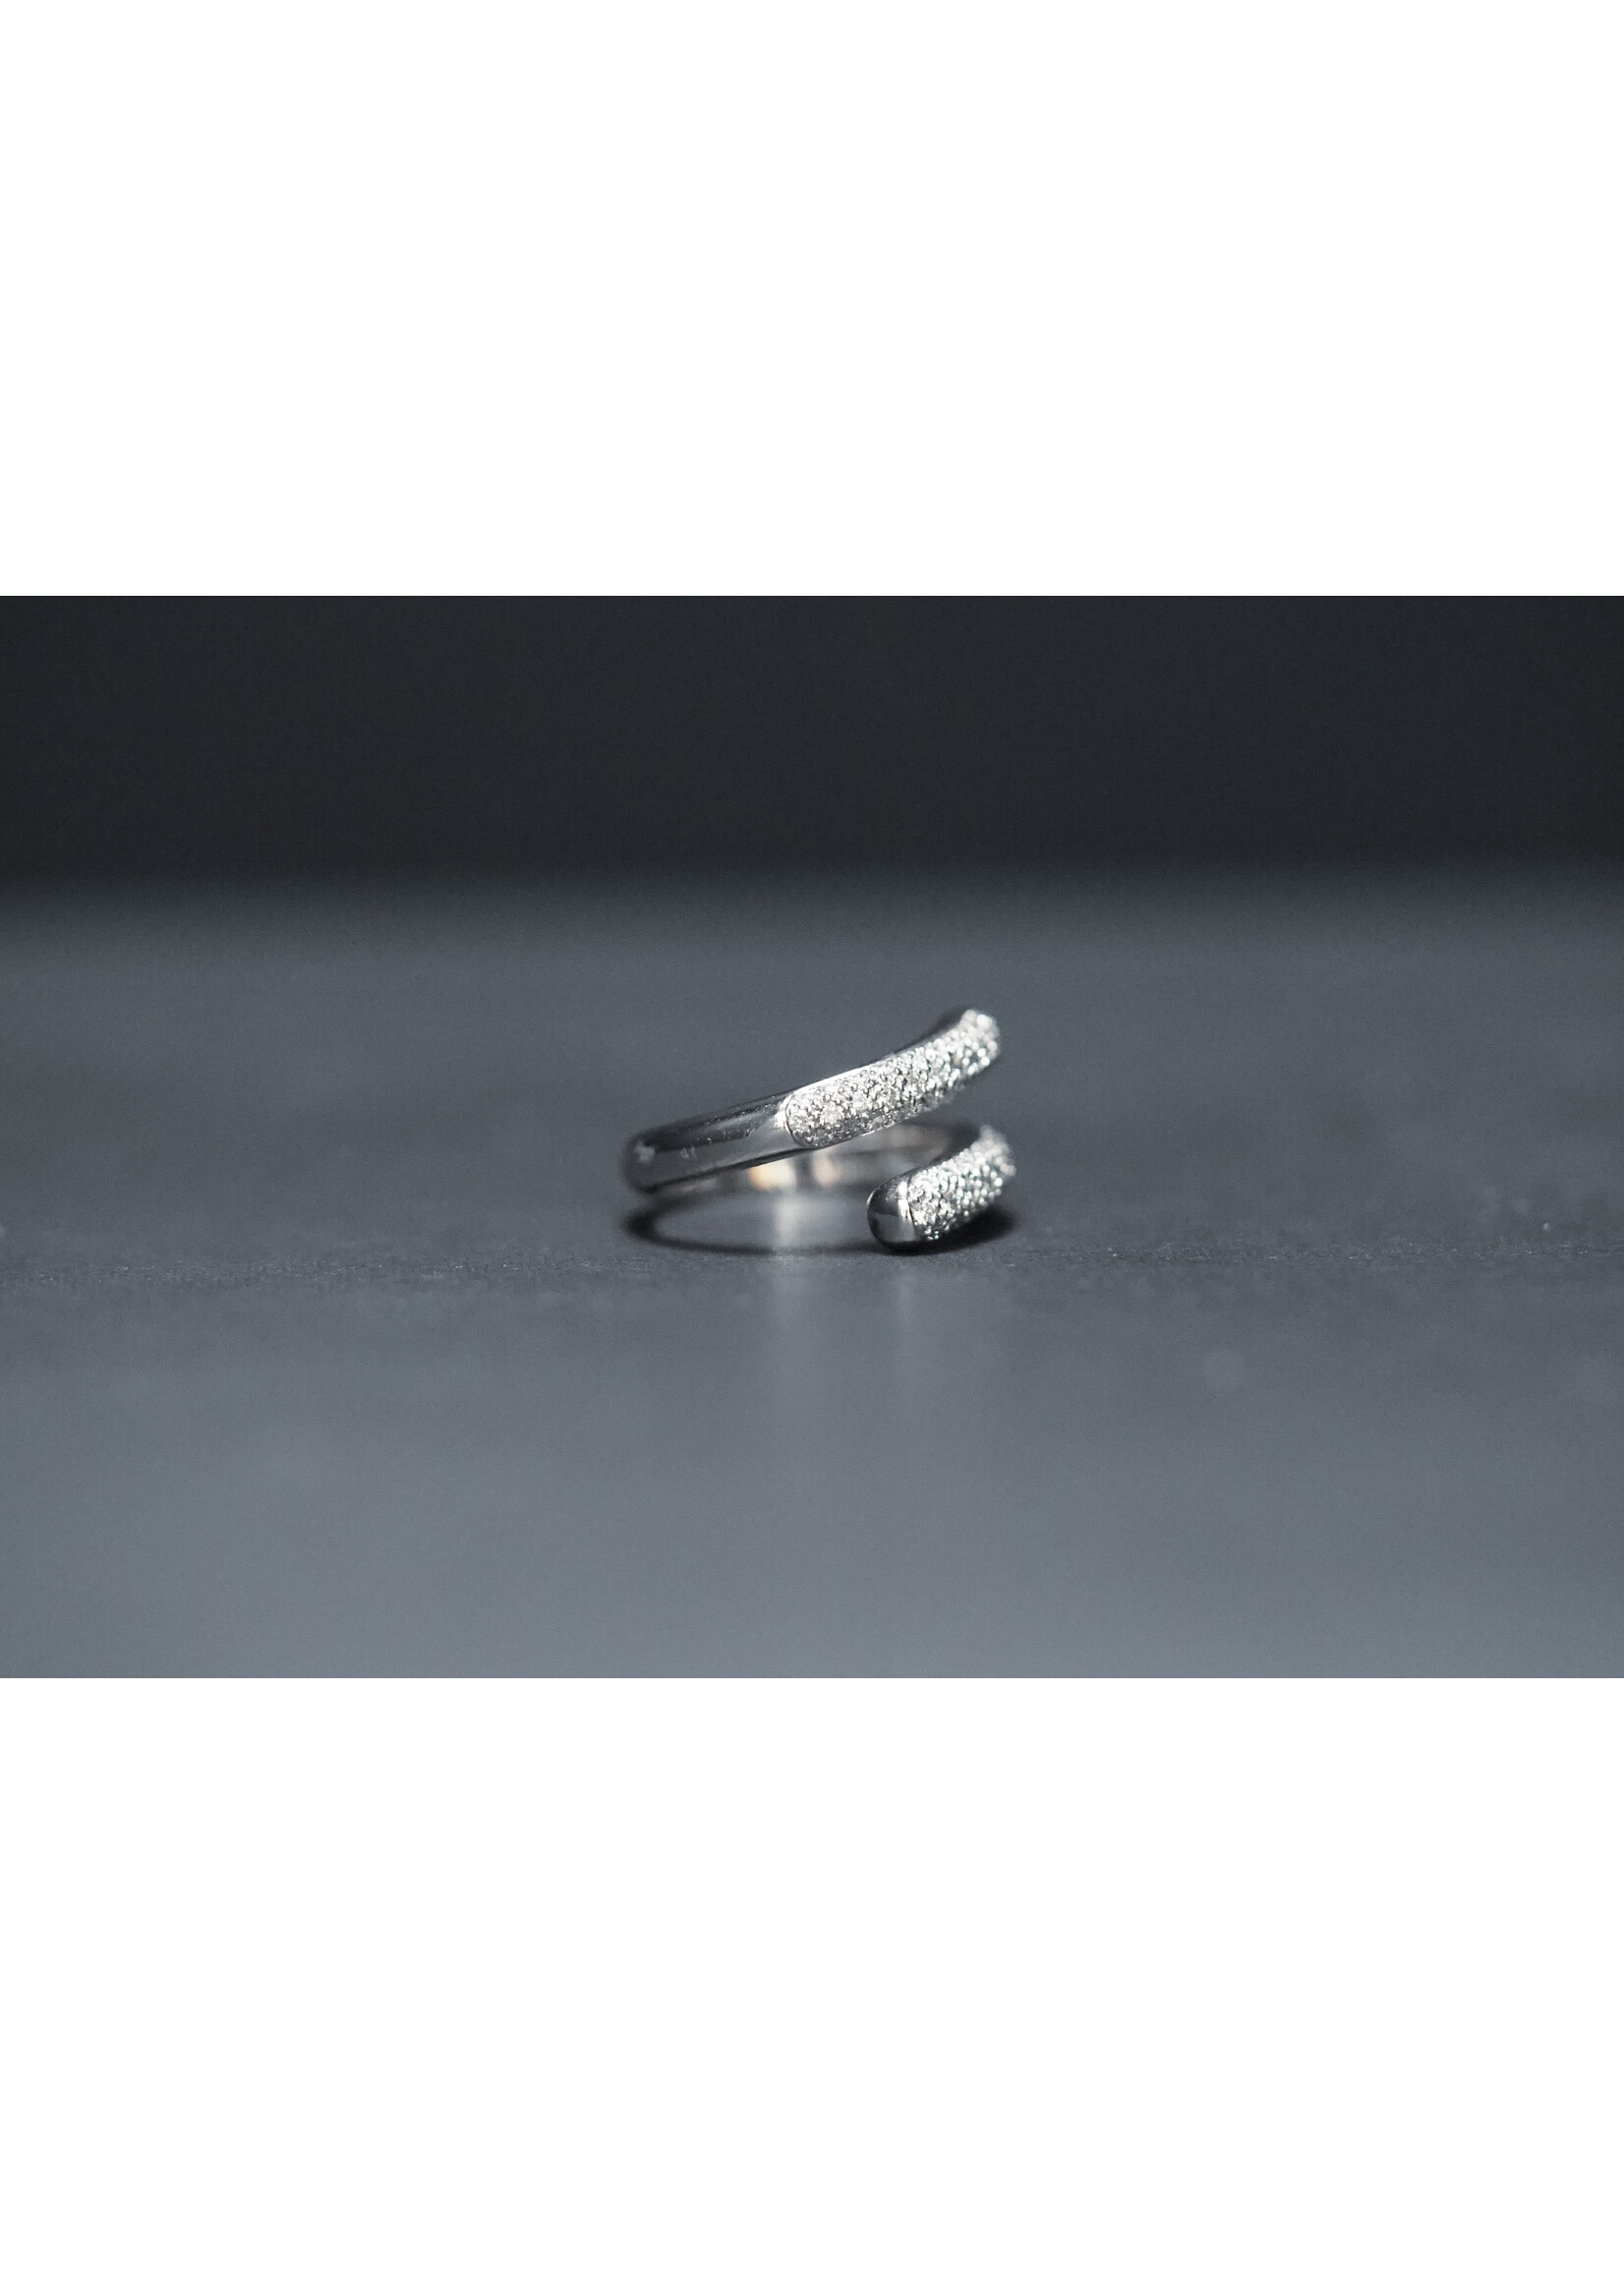 Platinum 7.6g .51ctw Diamond Pave Bypass Ring (size 6.25)